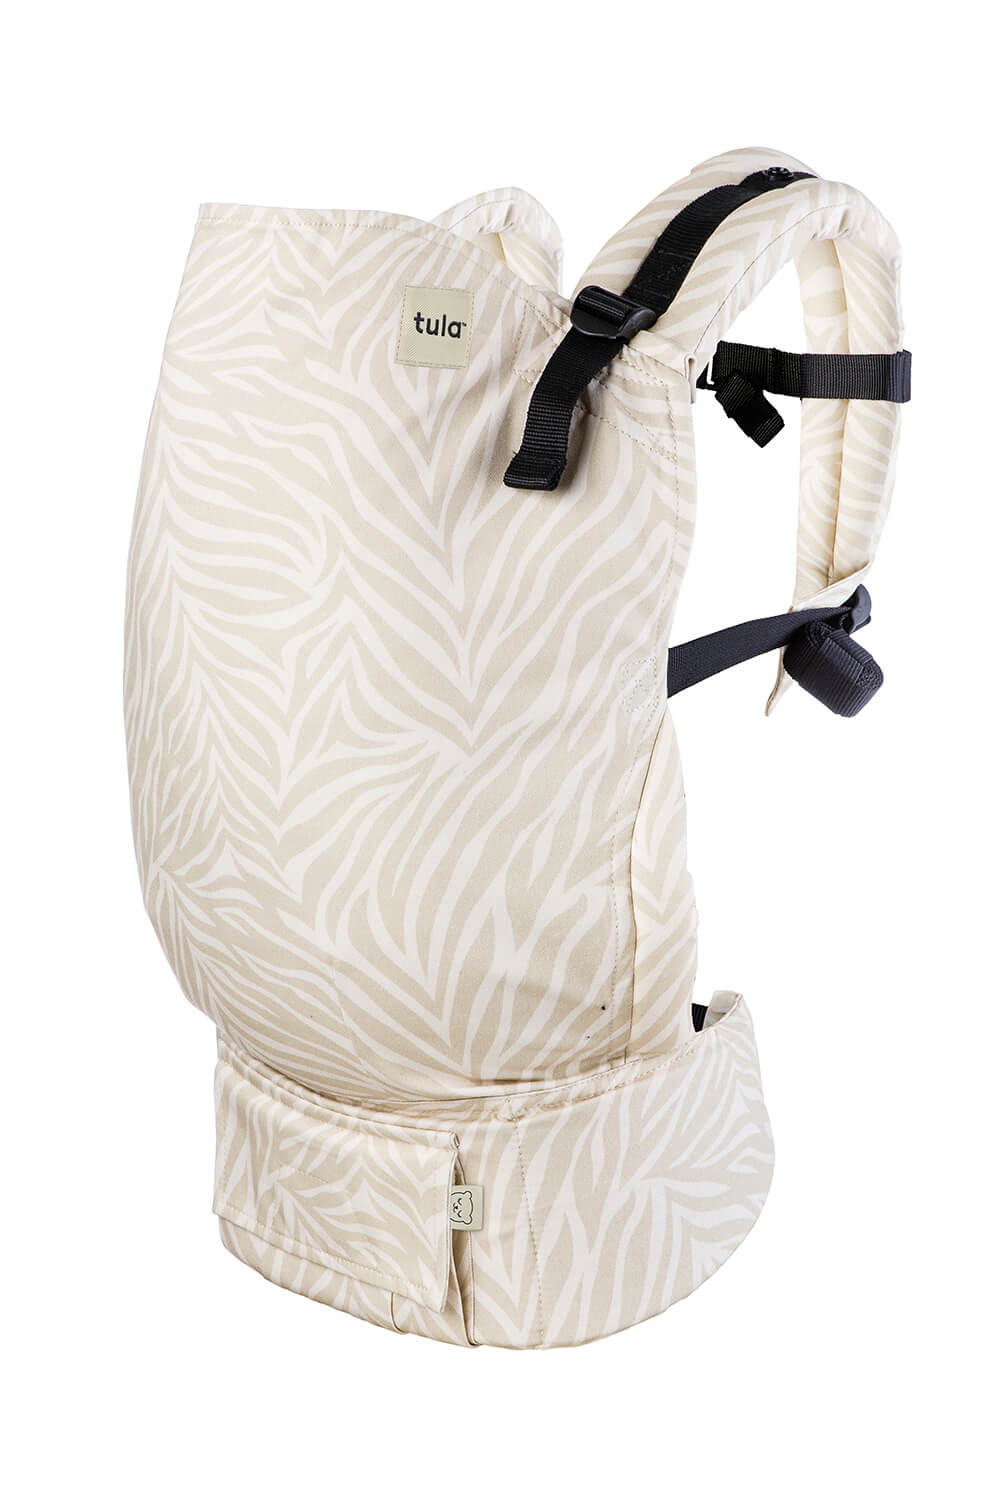 Tula Toddler Carrier Savanna i a subtle zebra print in creamy hues